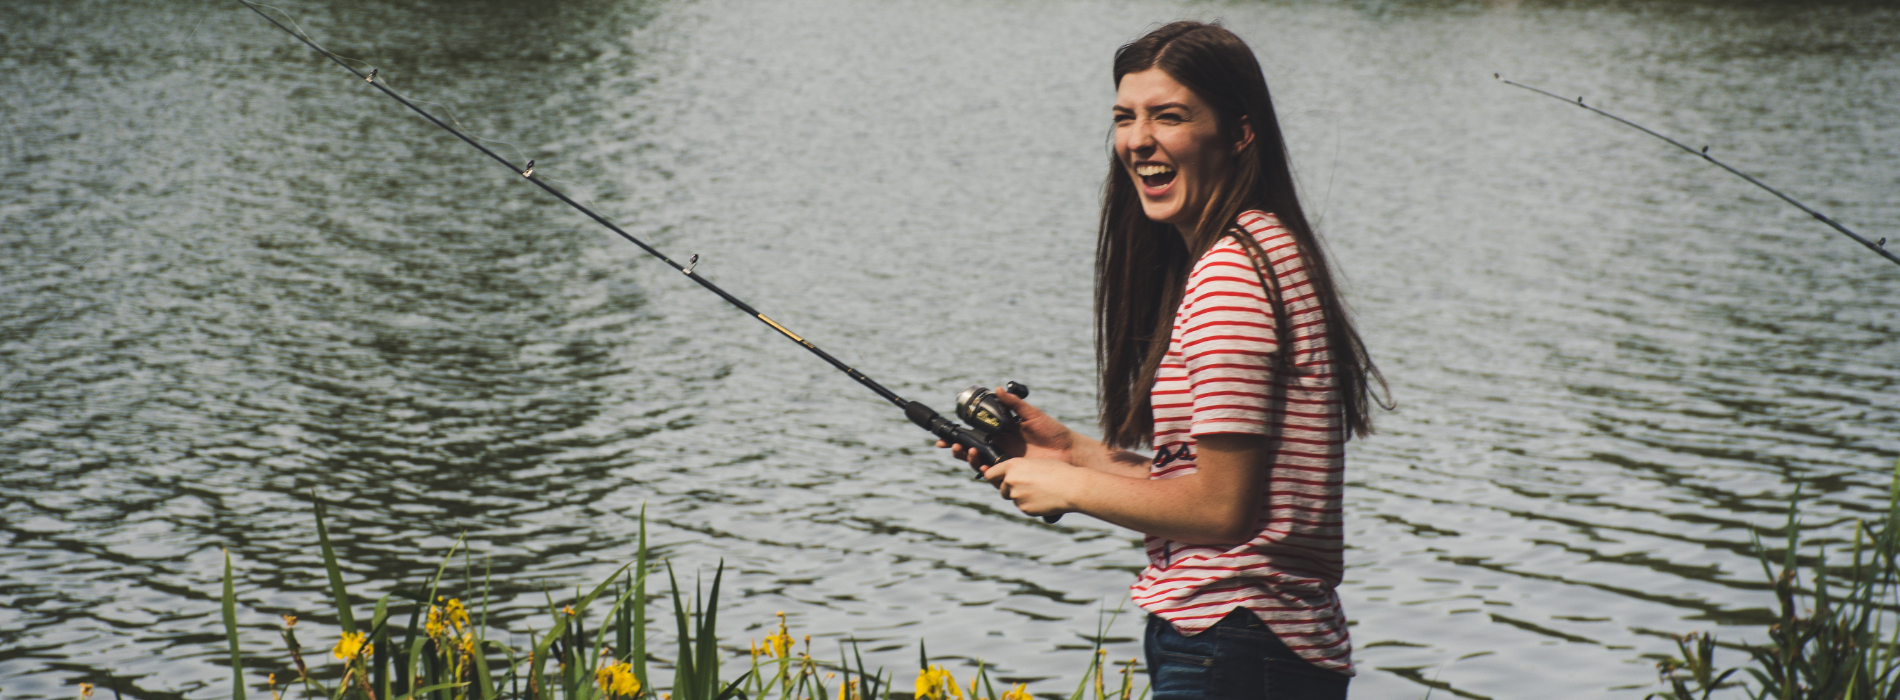 fishing_girl